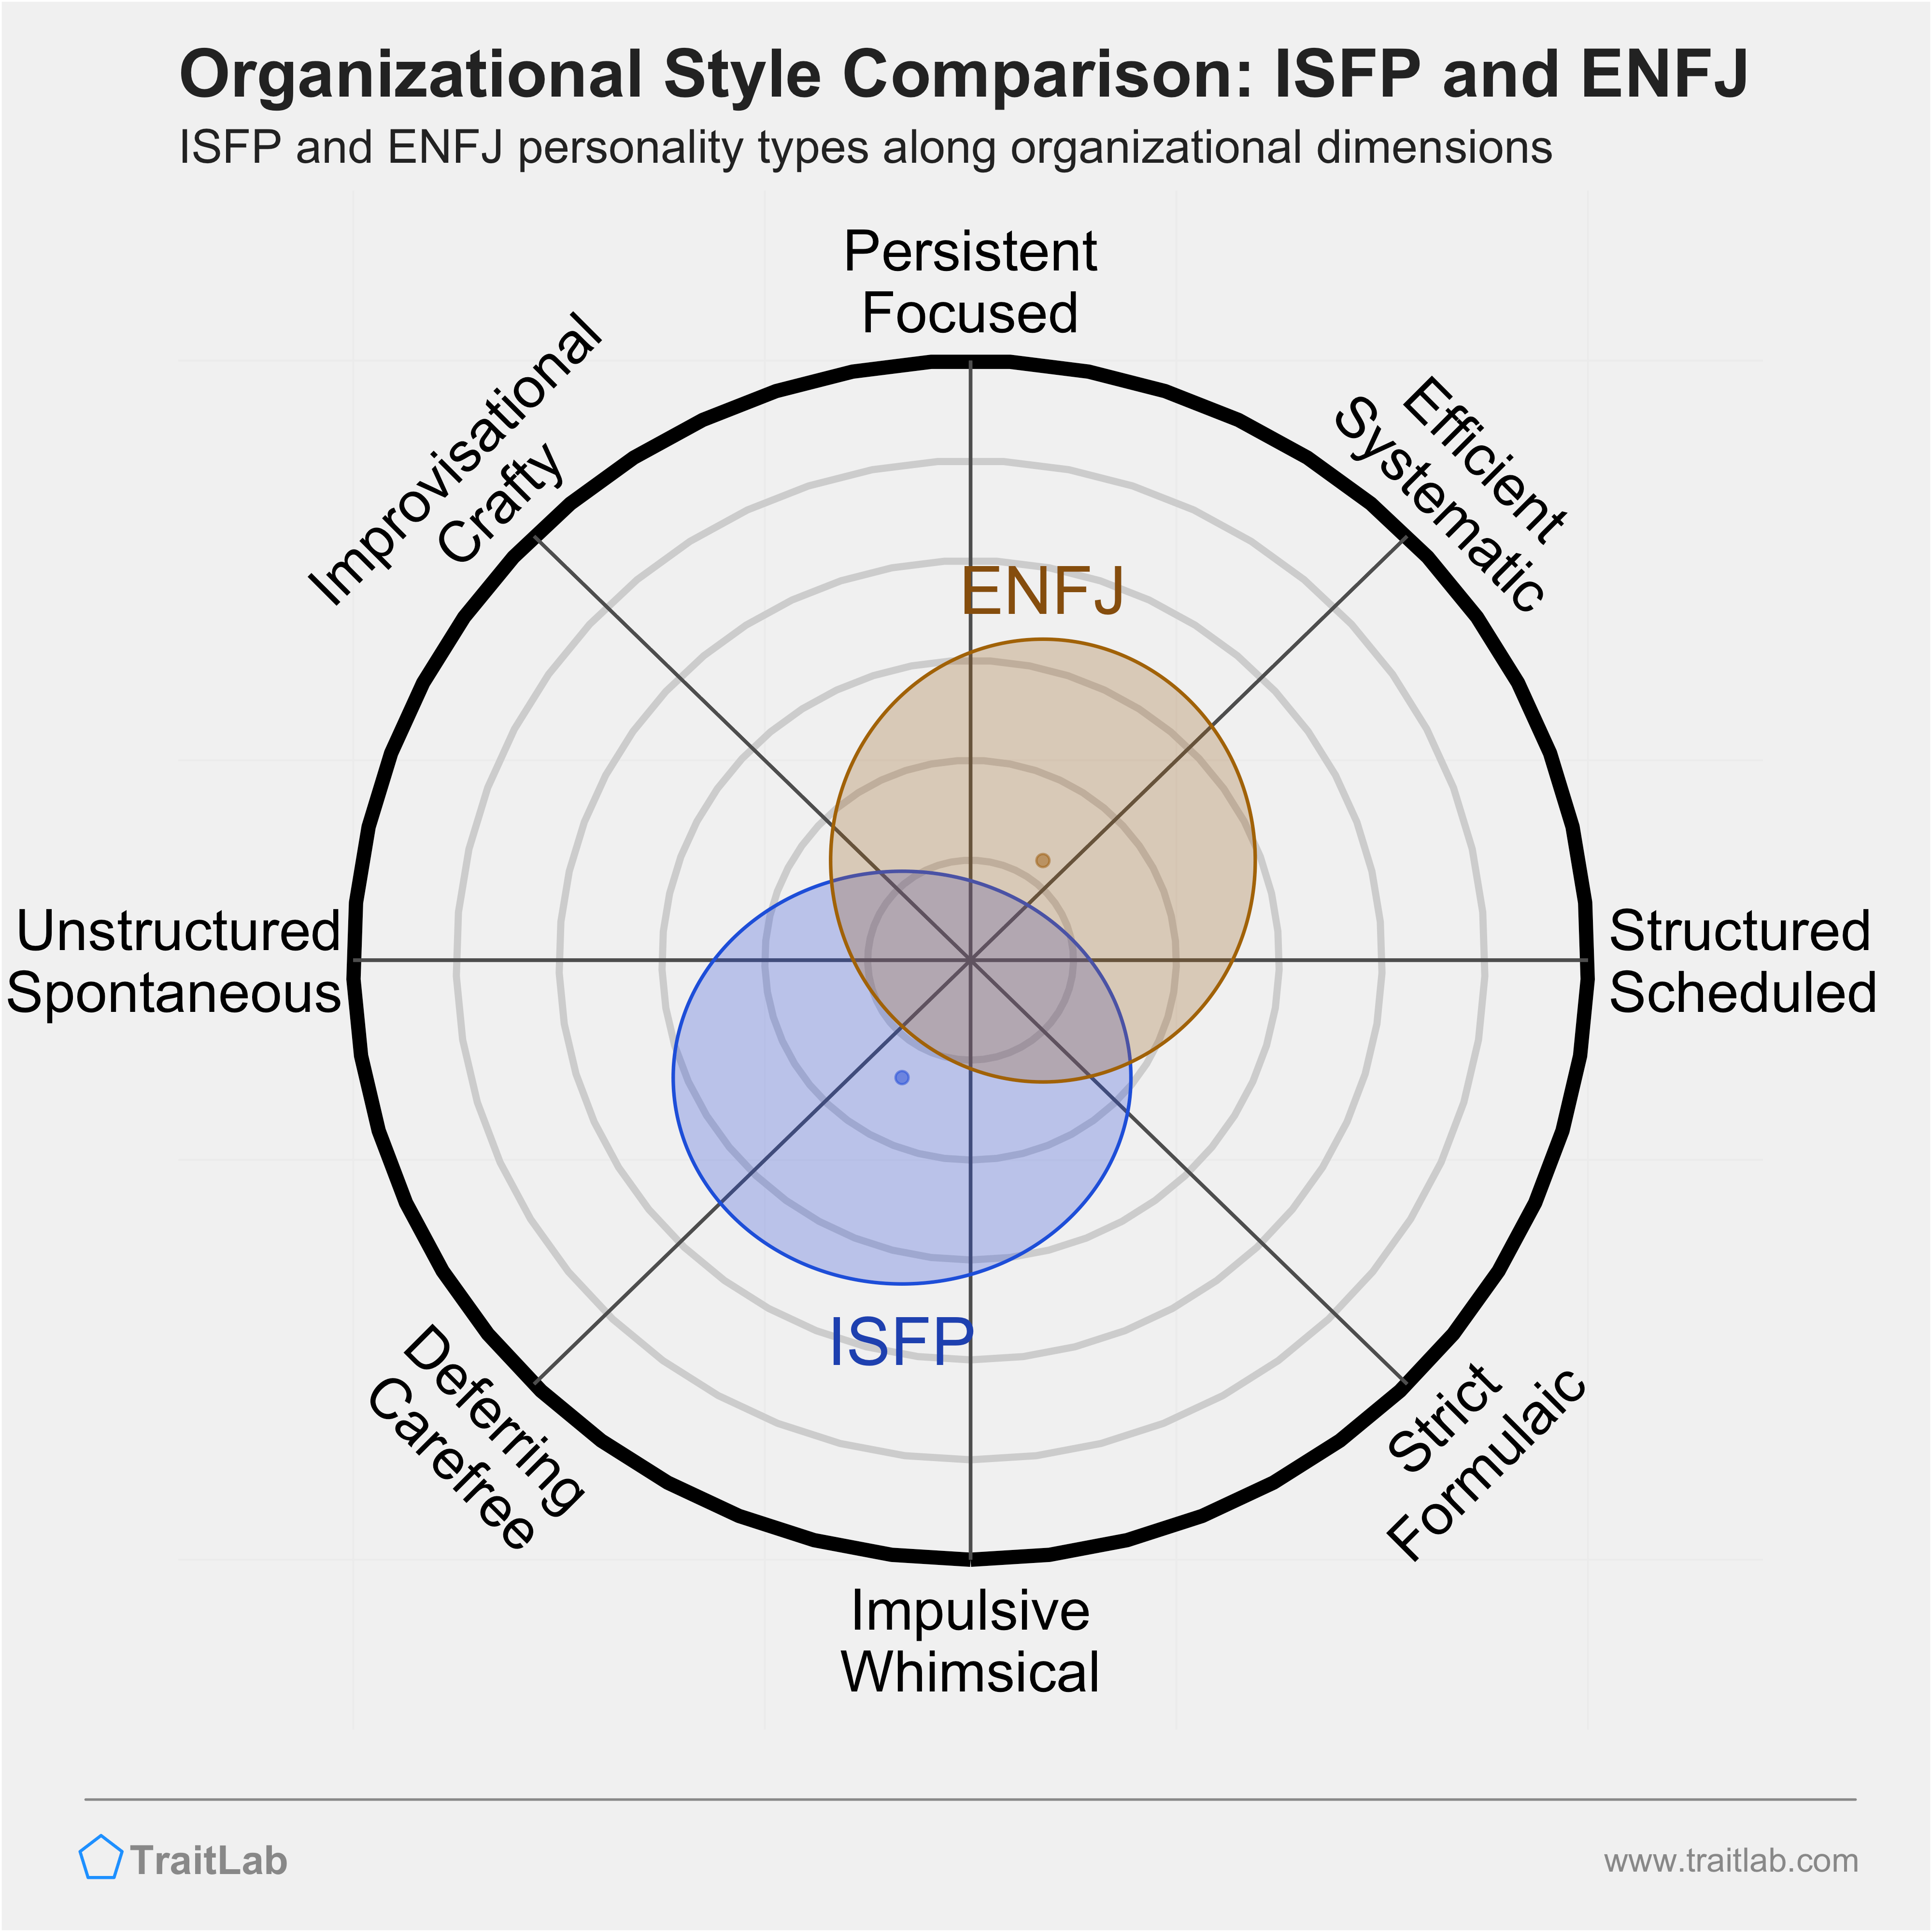 ISFP and ENFJ comparison across organizational dimensions